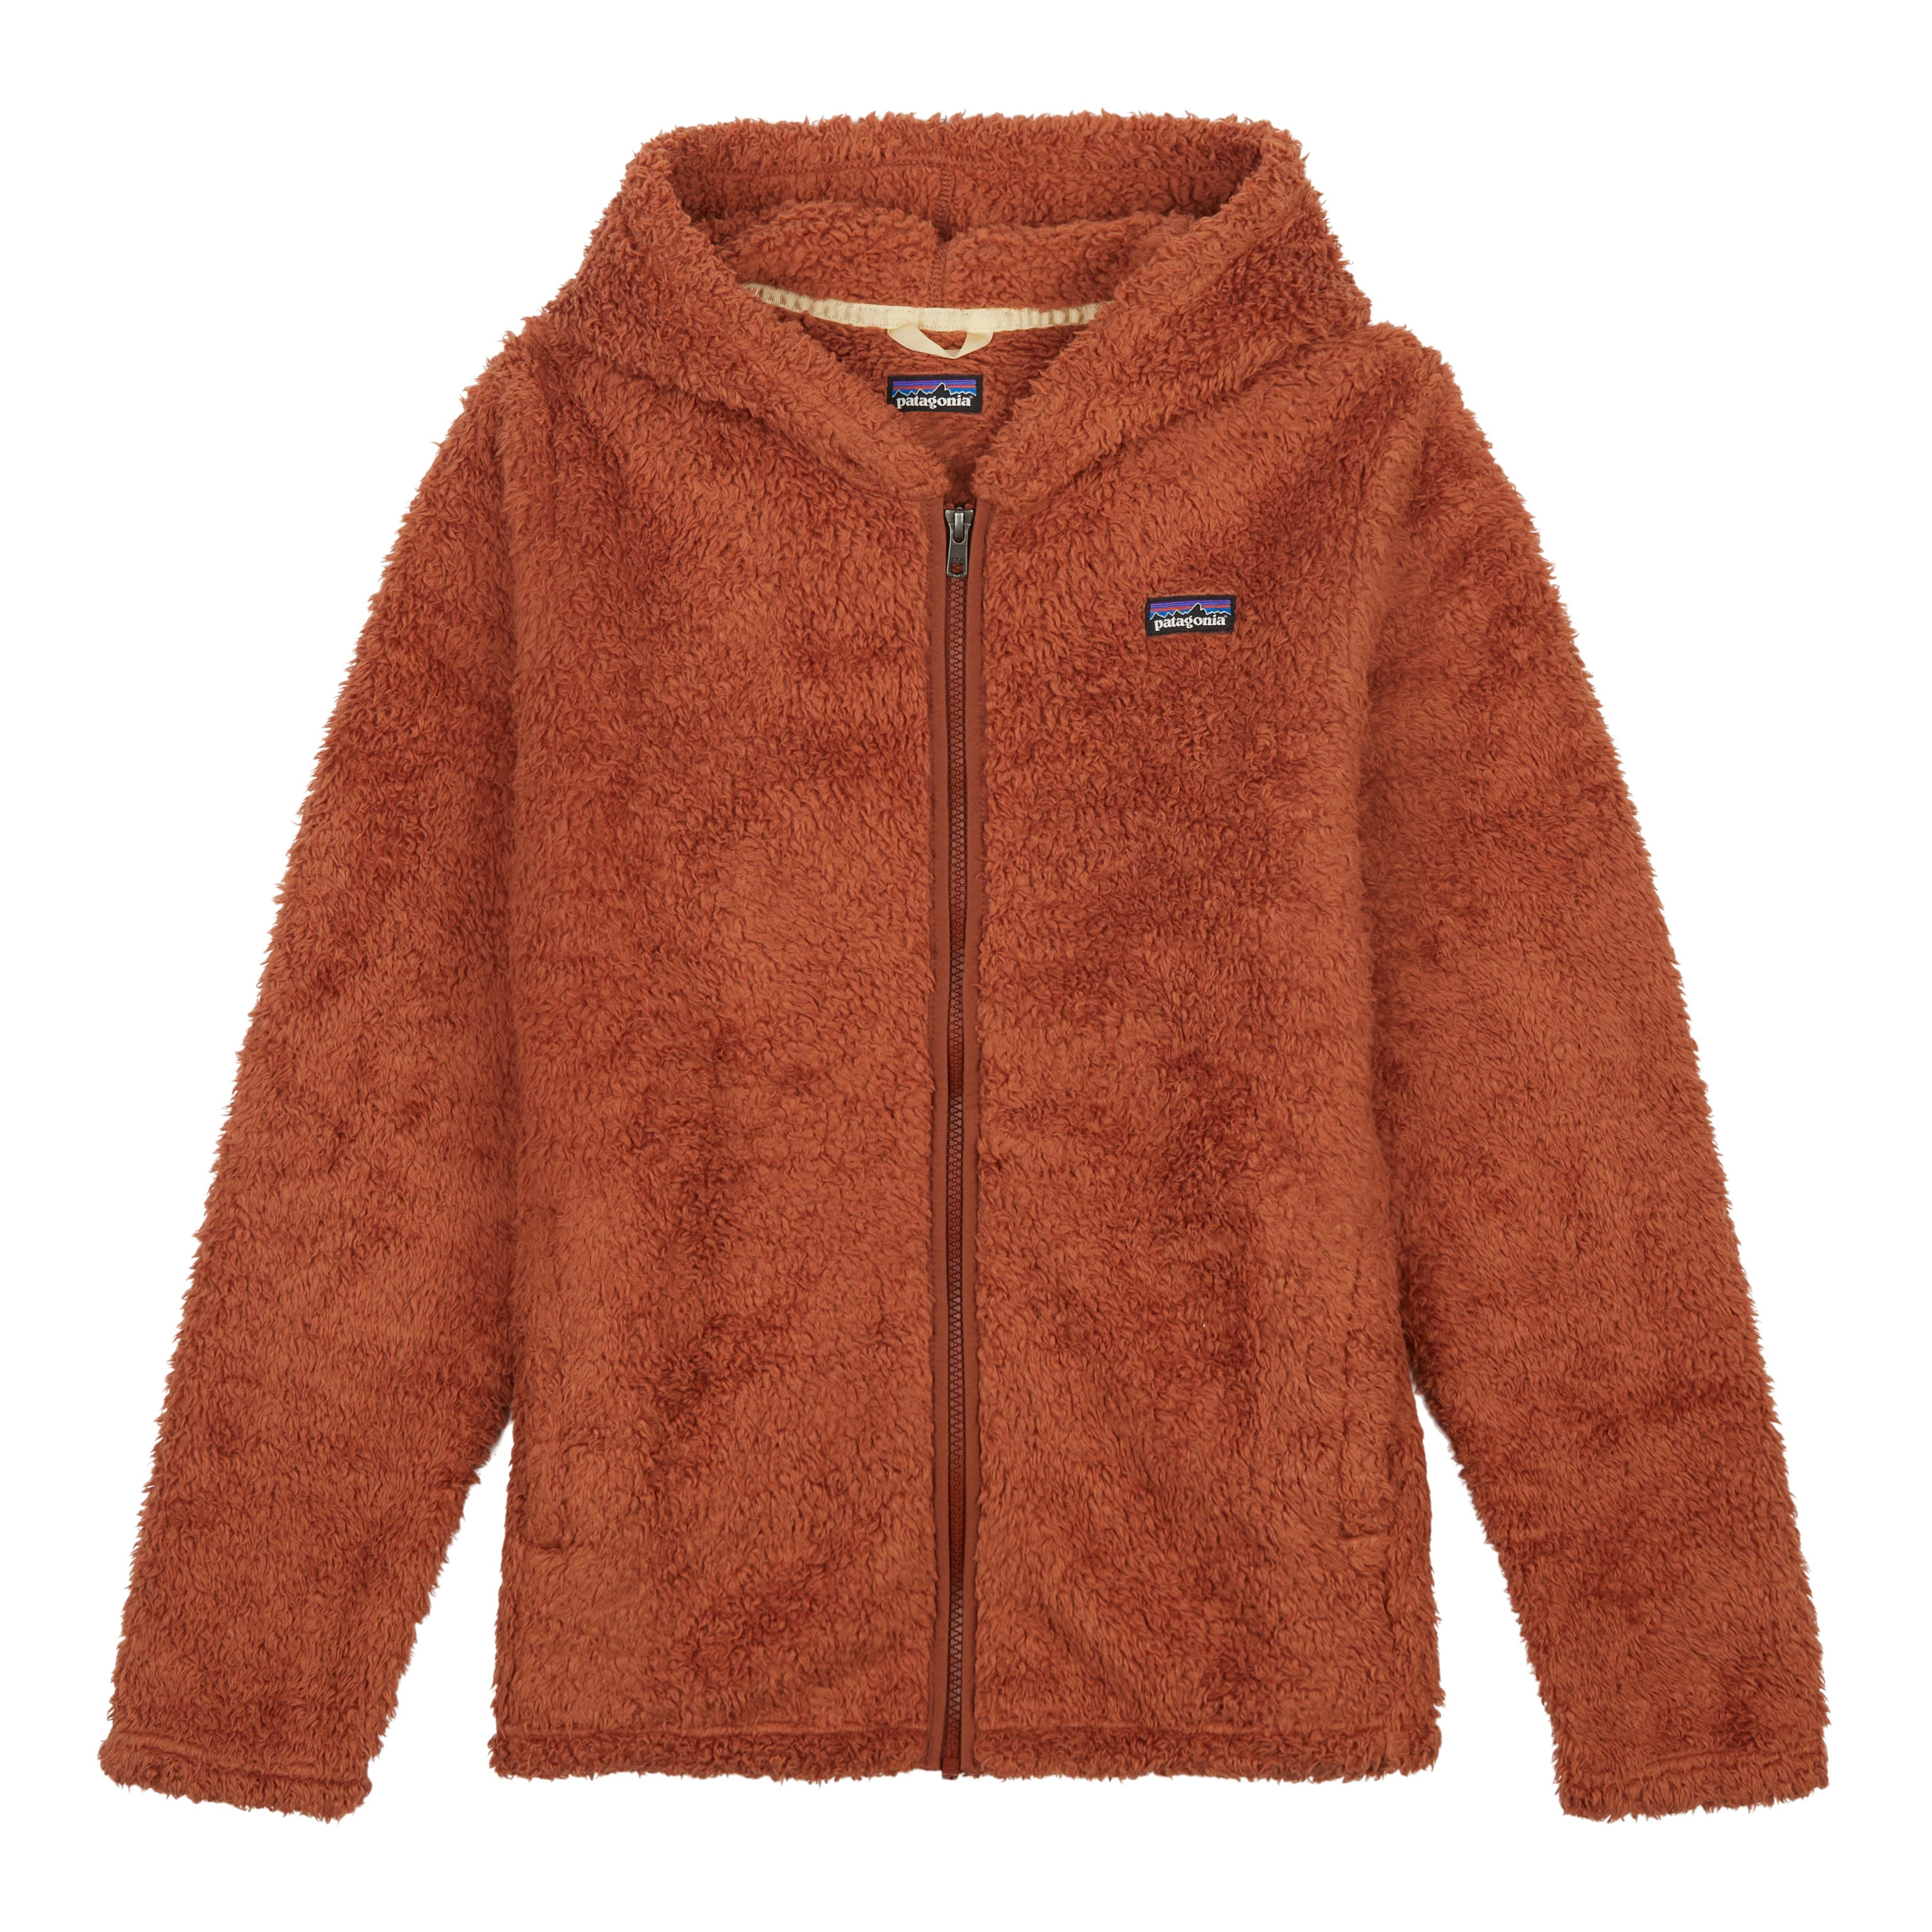 Patagonia L Jacket Women Los Gatos Fleece Cost Plush Khaki Tan Lined Full  Zip